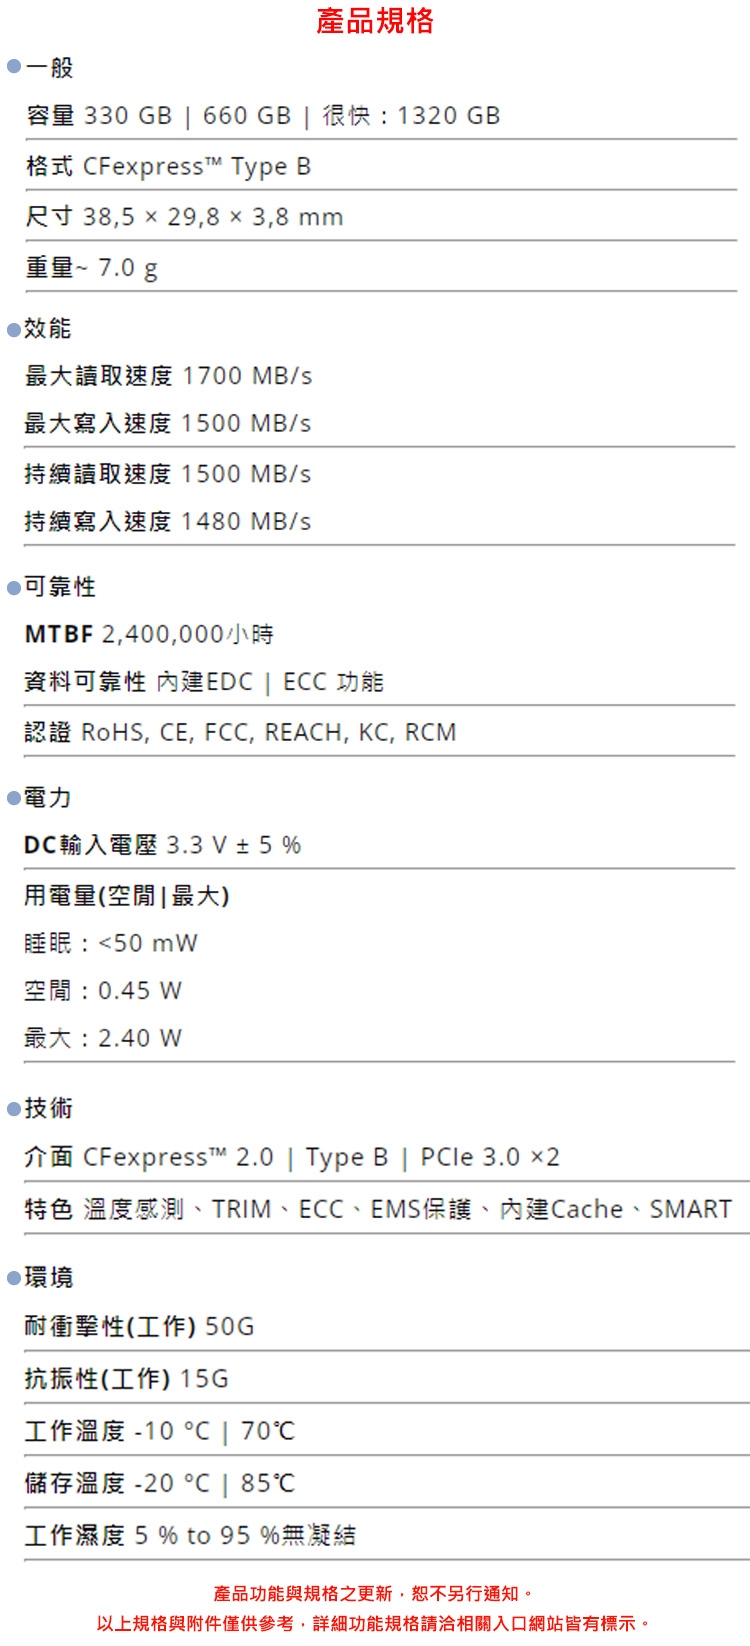 mWLƽXFHnANGELBIRD AV PRO CFexpress XT 660 GB OХd